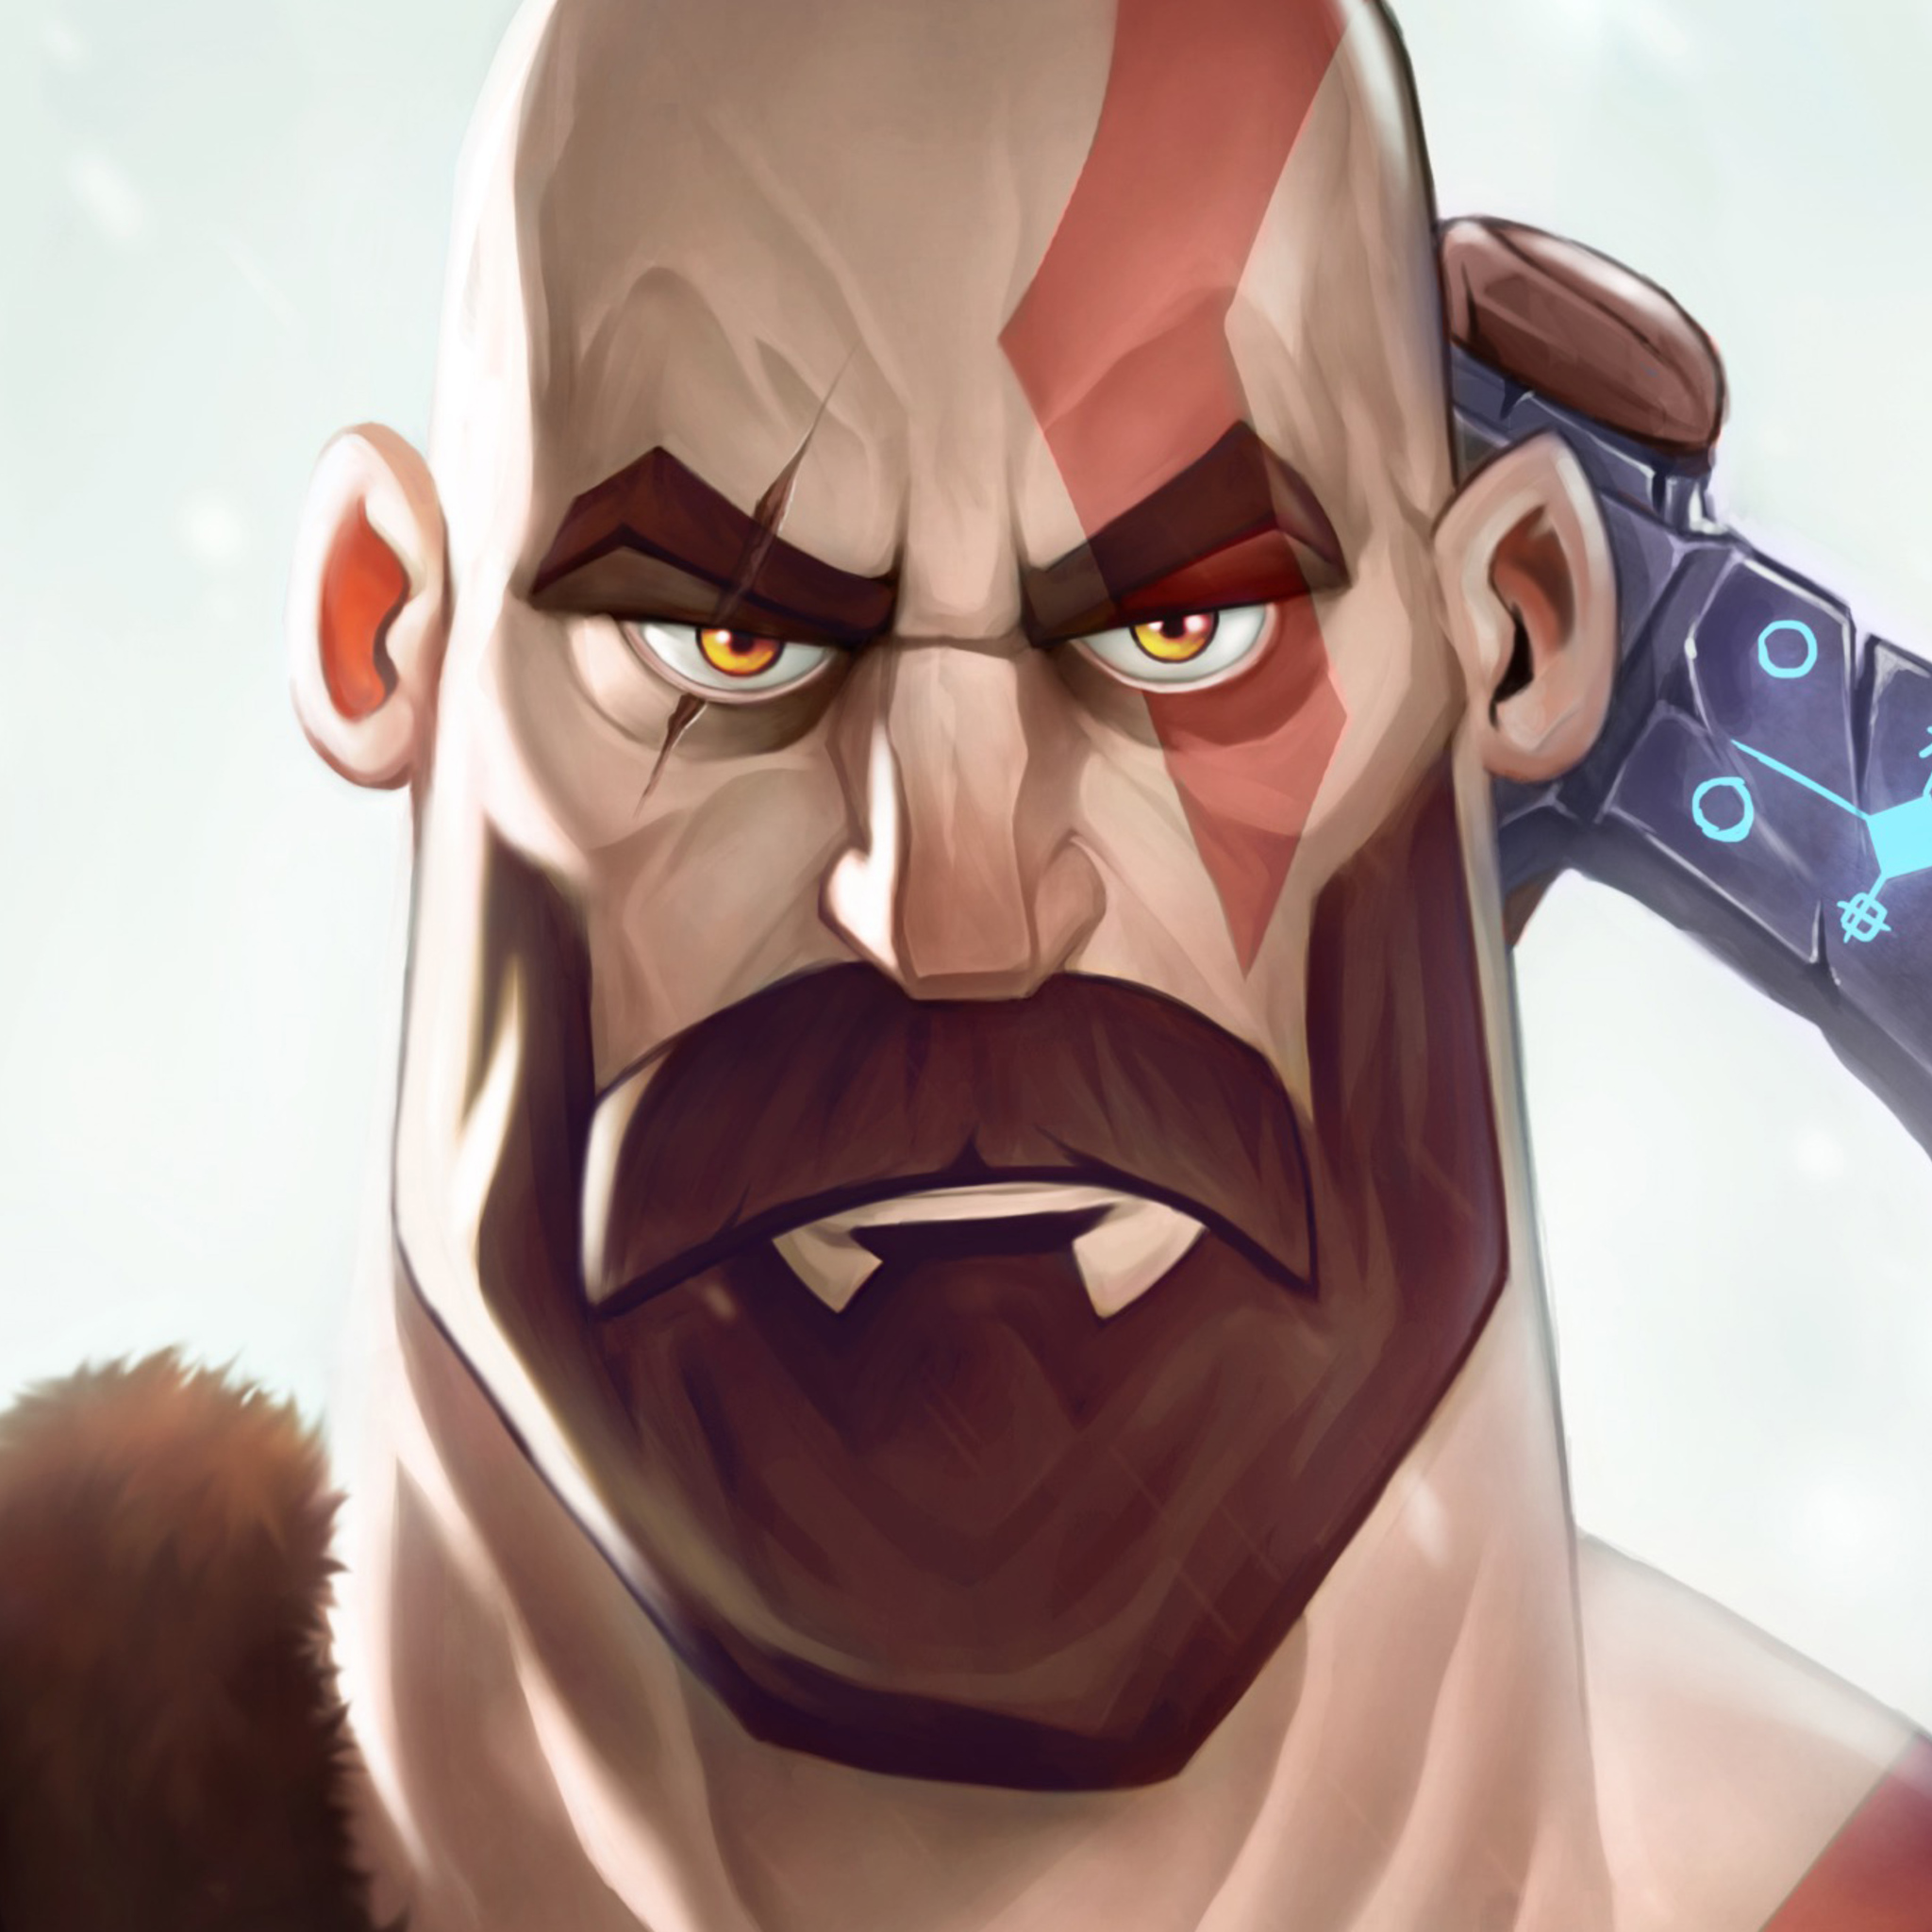 kratos-god-of-war-illustration-ob.jpg. 